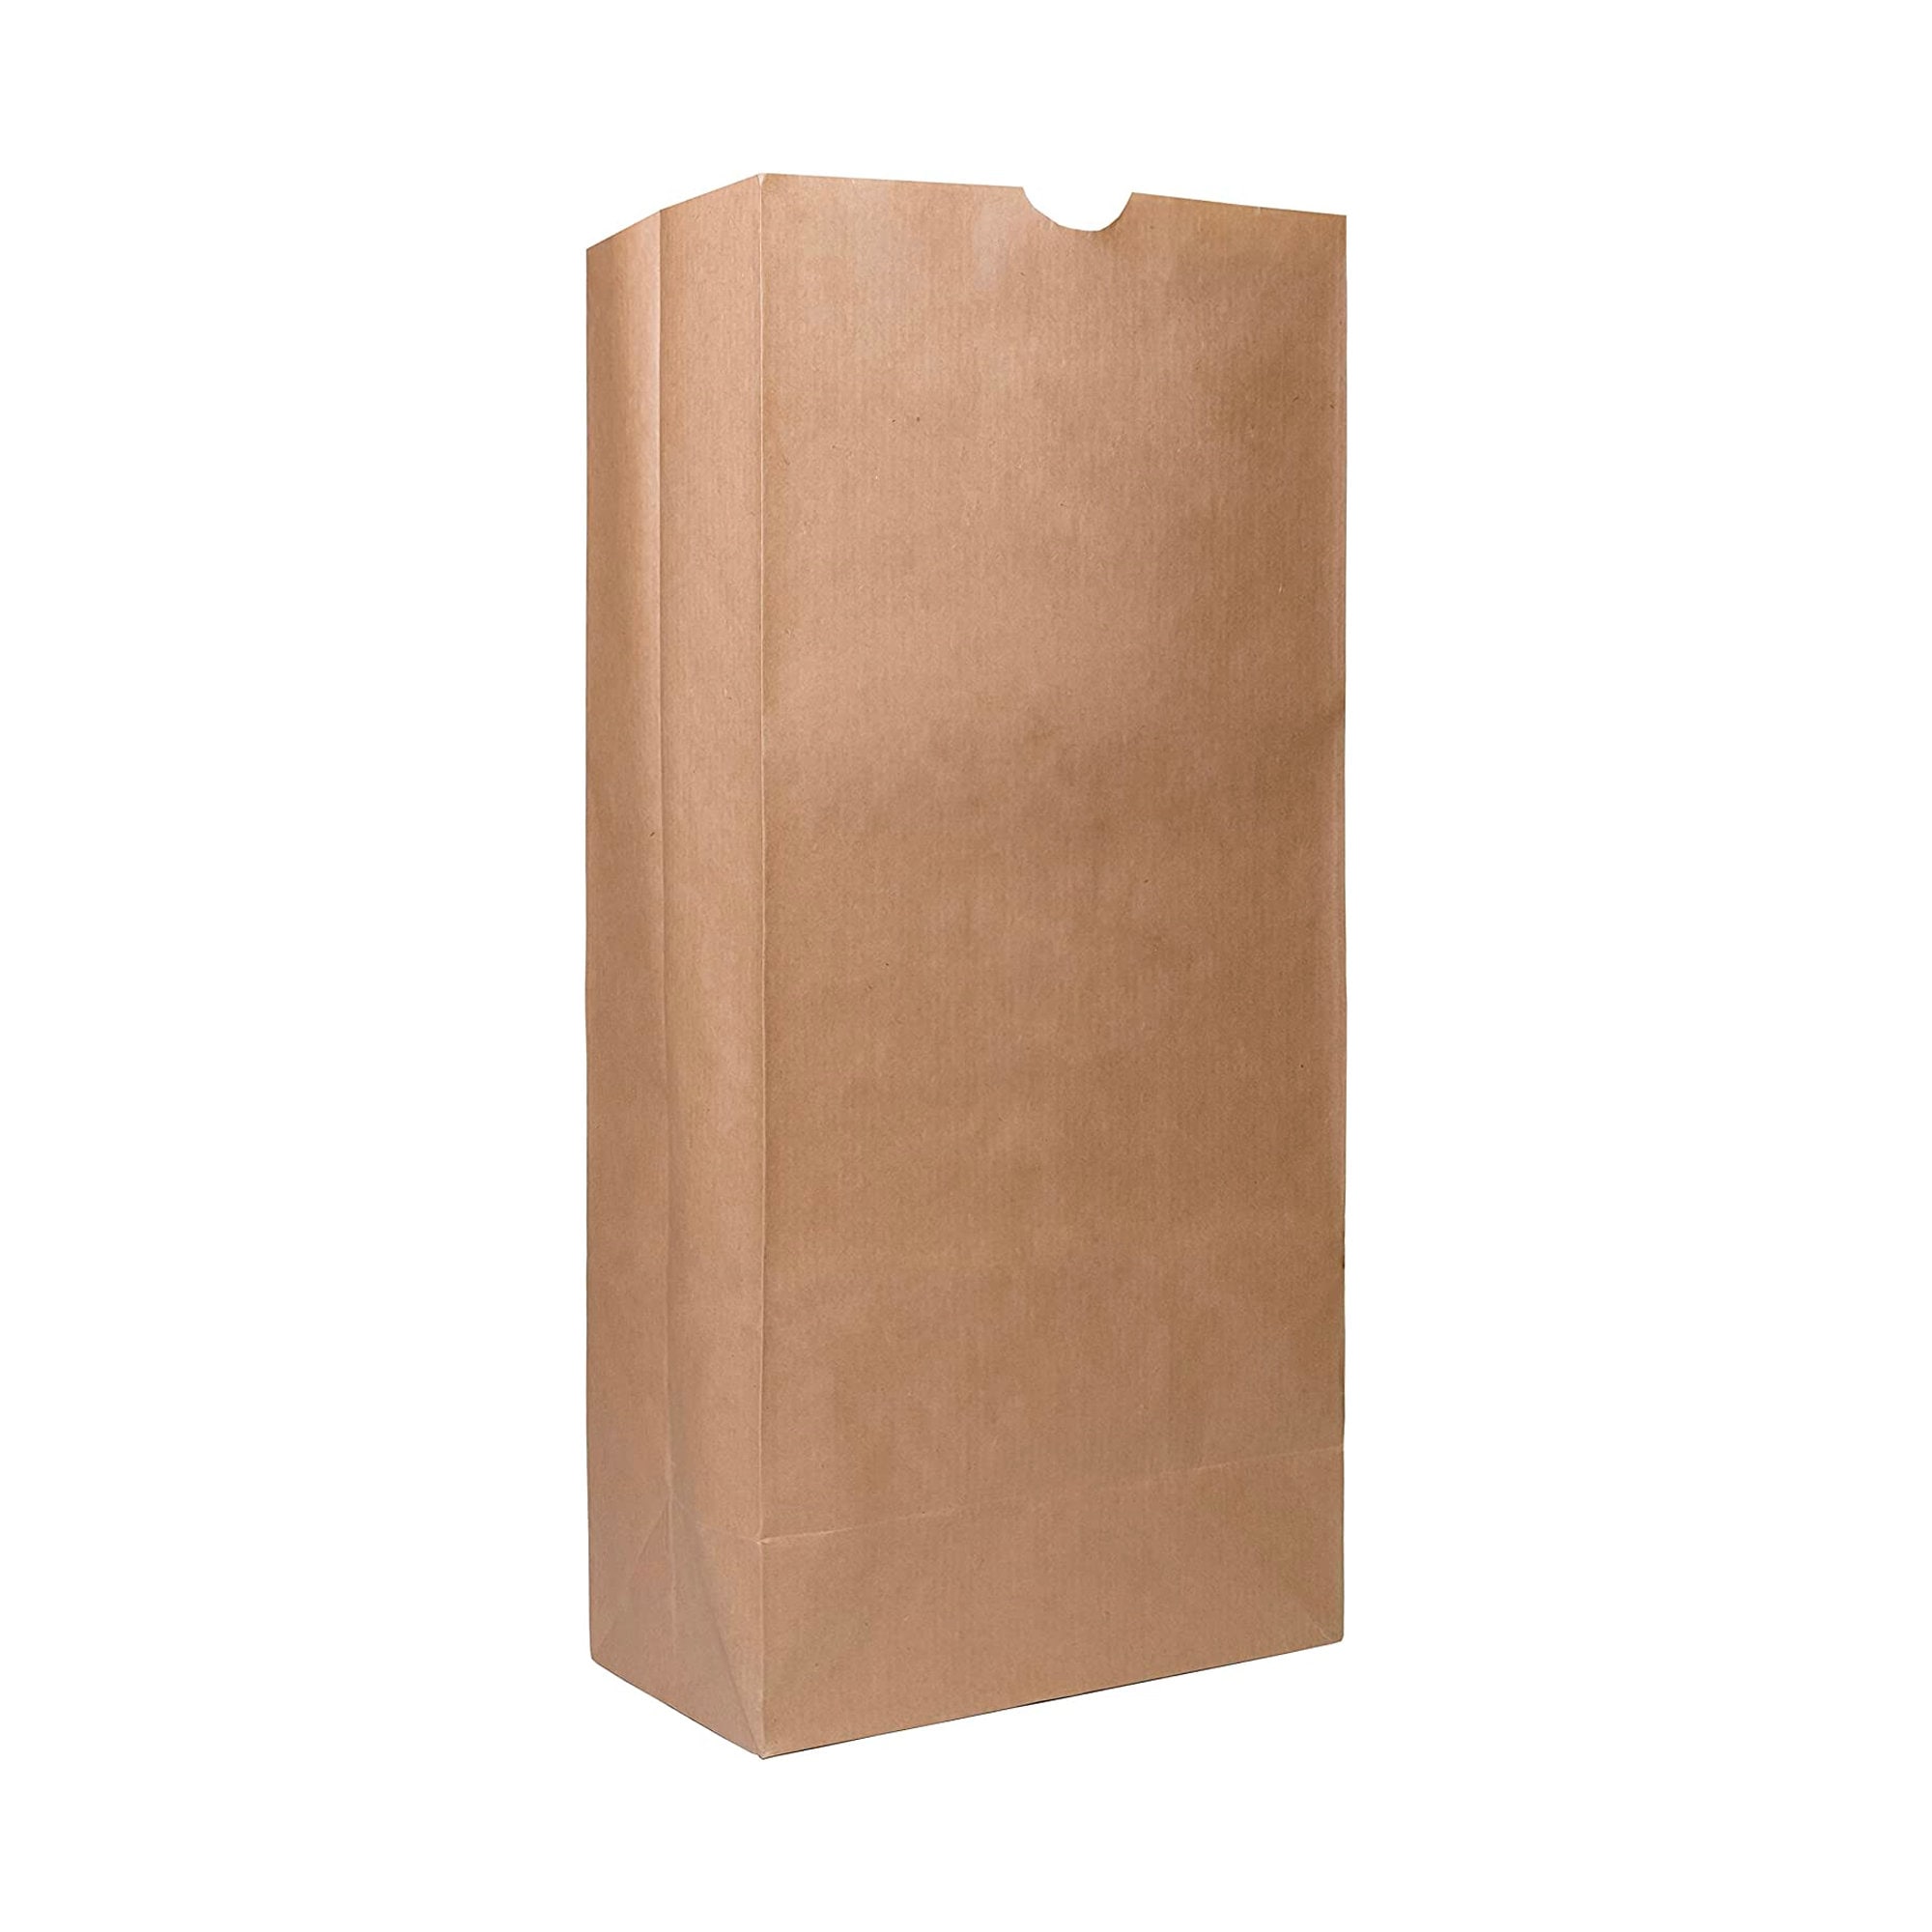 Paper Lunch Bags 25 Lb White Paper Bags 25LB Capacity - Kraft